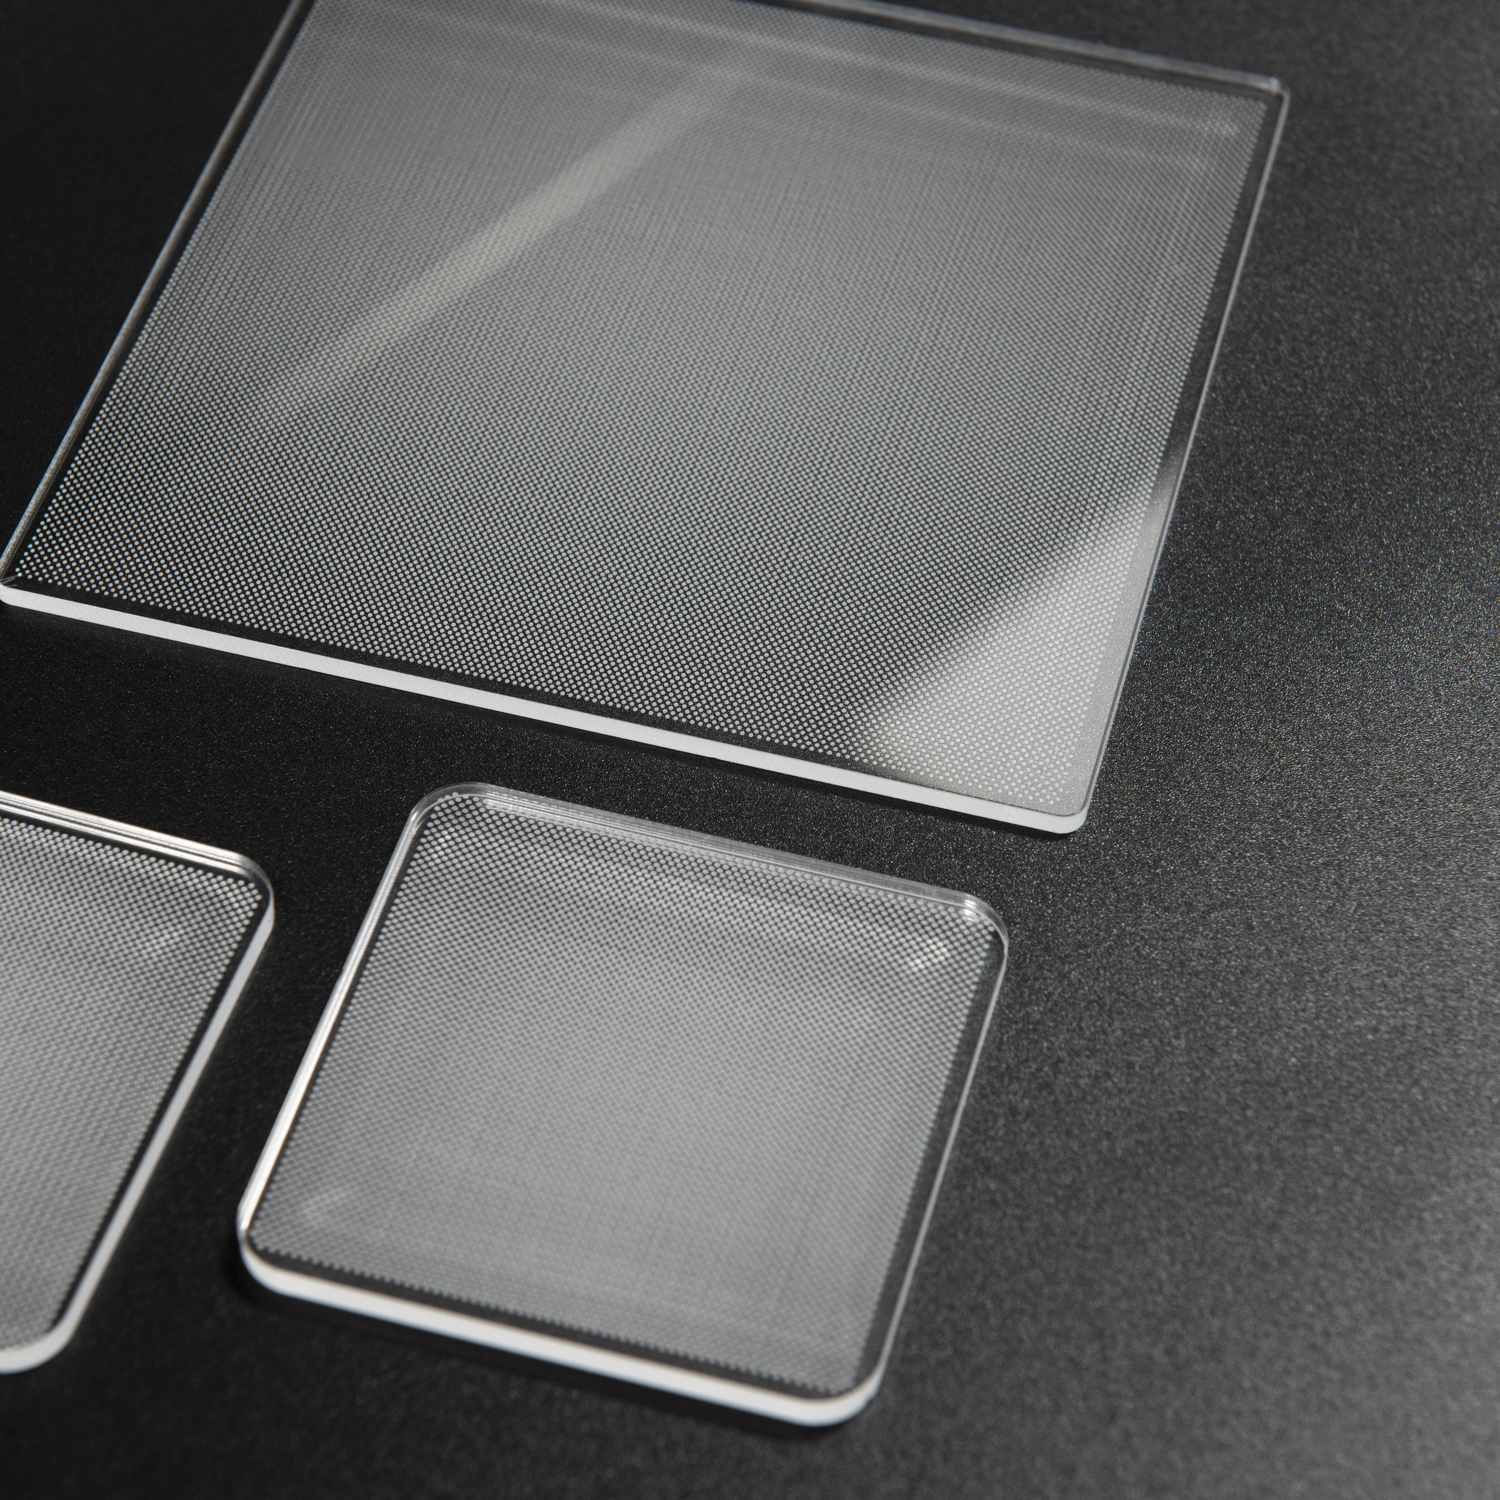 Acrylic Waterproof Ultra-Thin LED Light Guide Plate